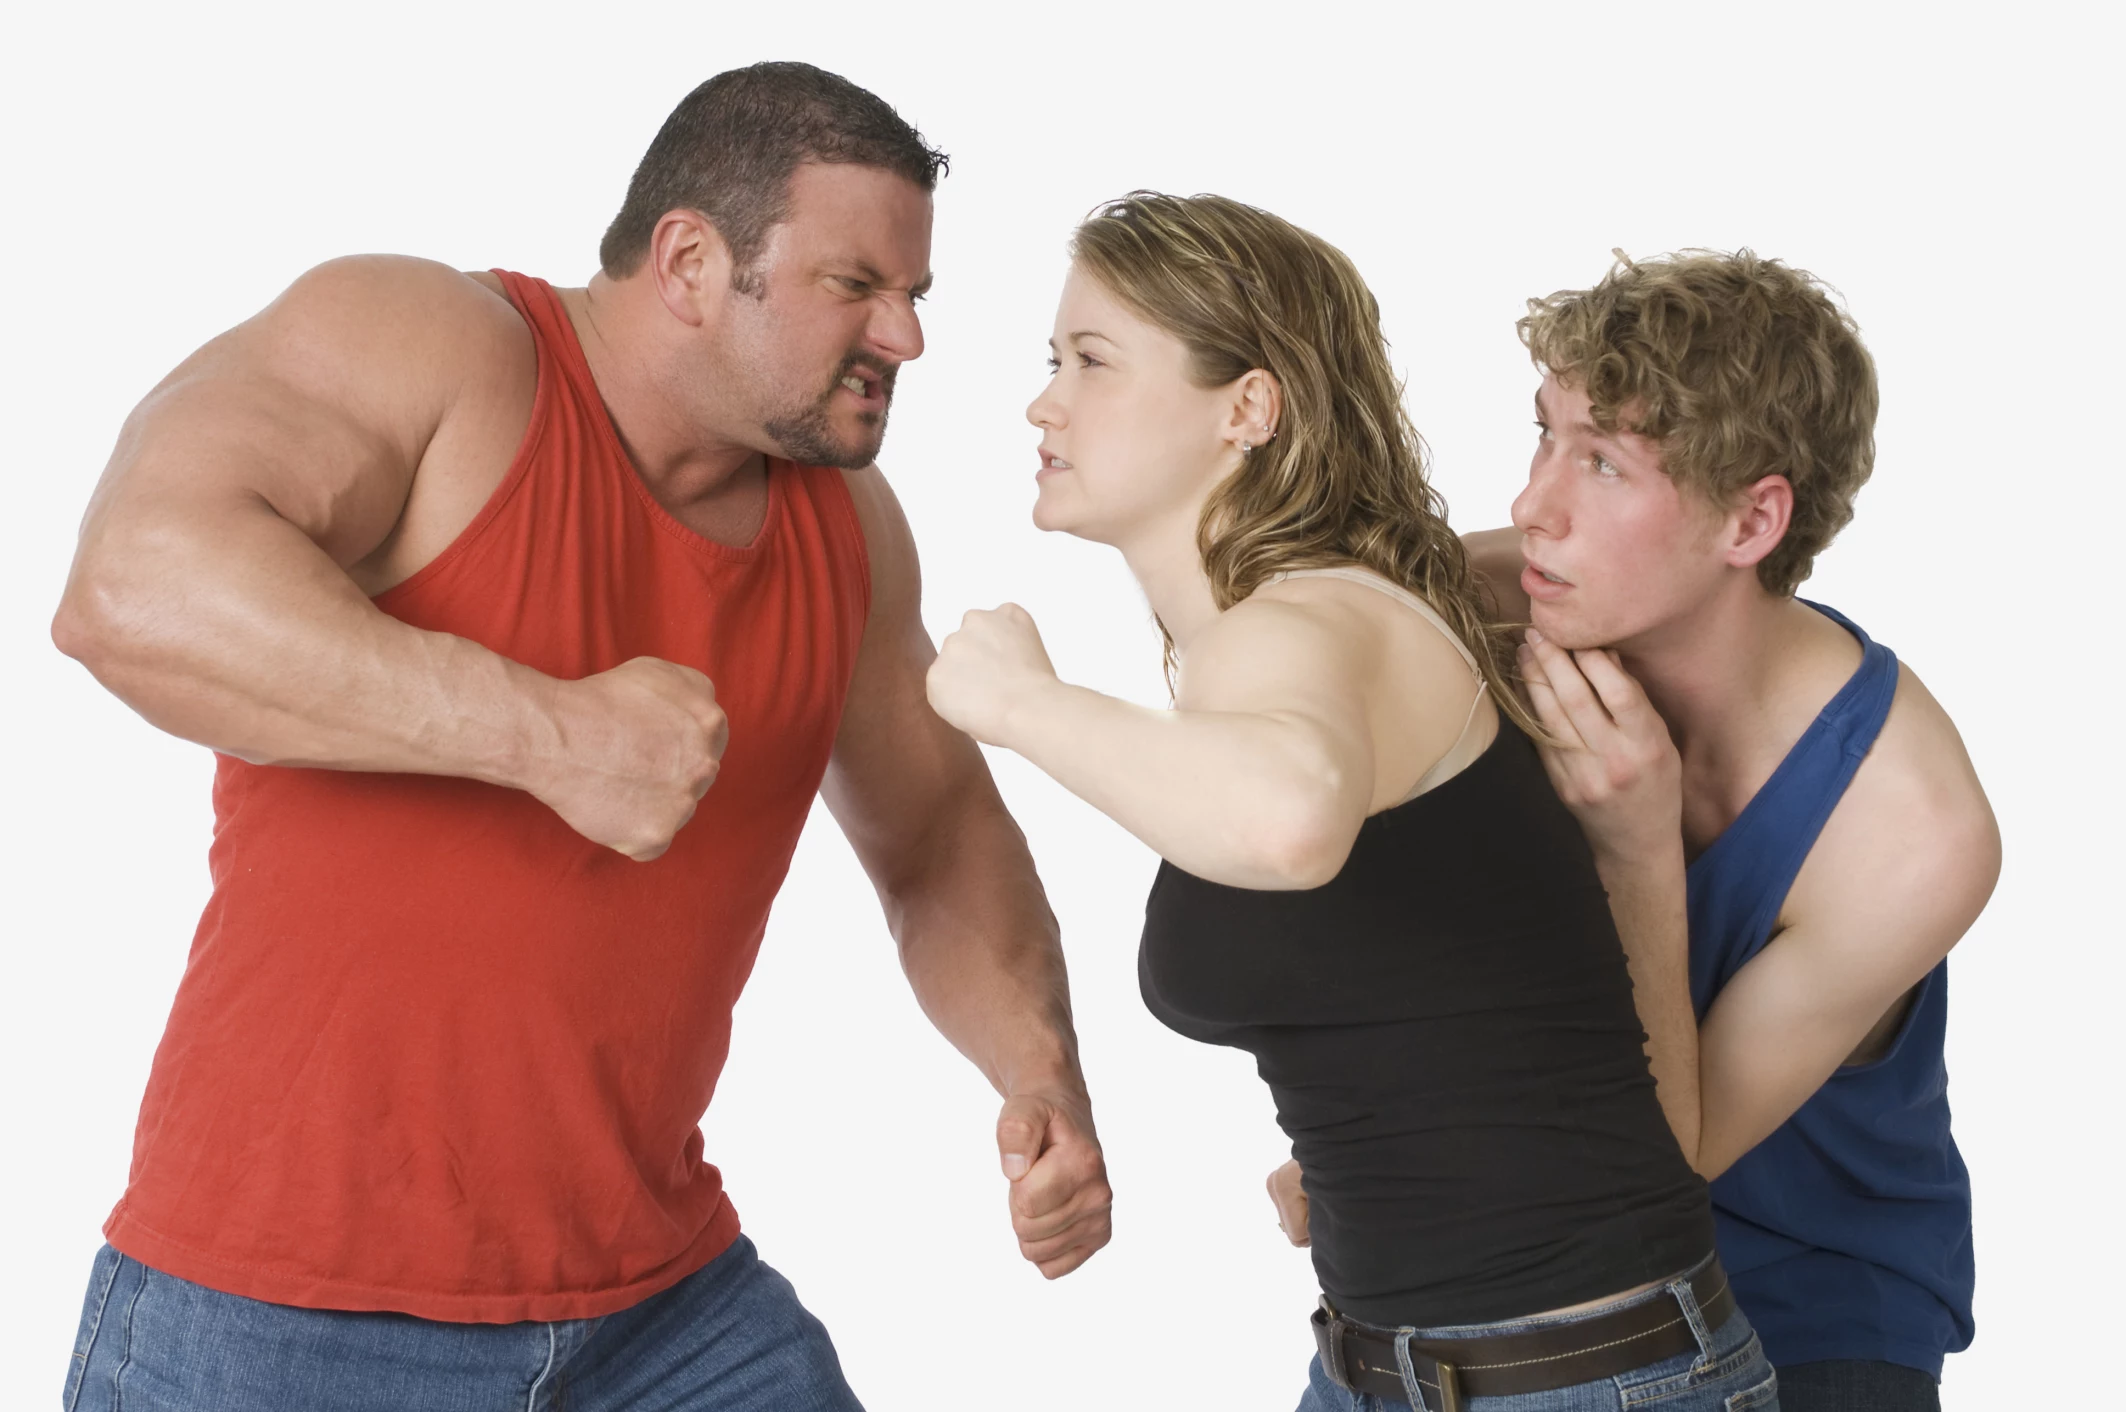 Parents fighting photos